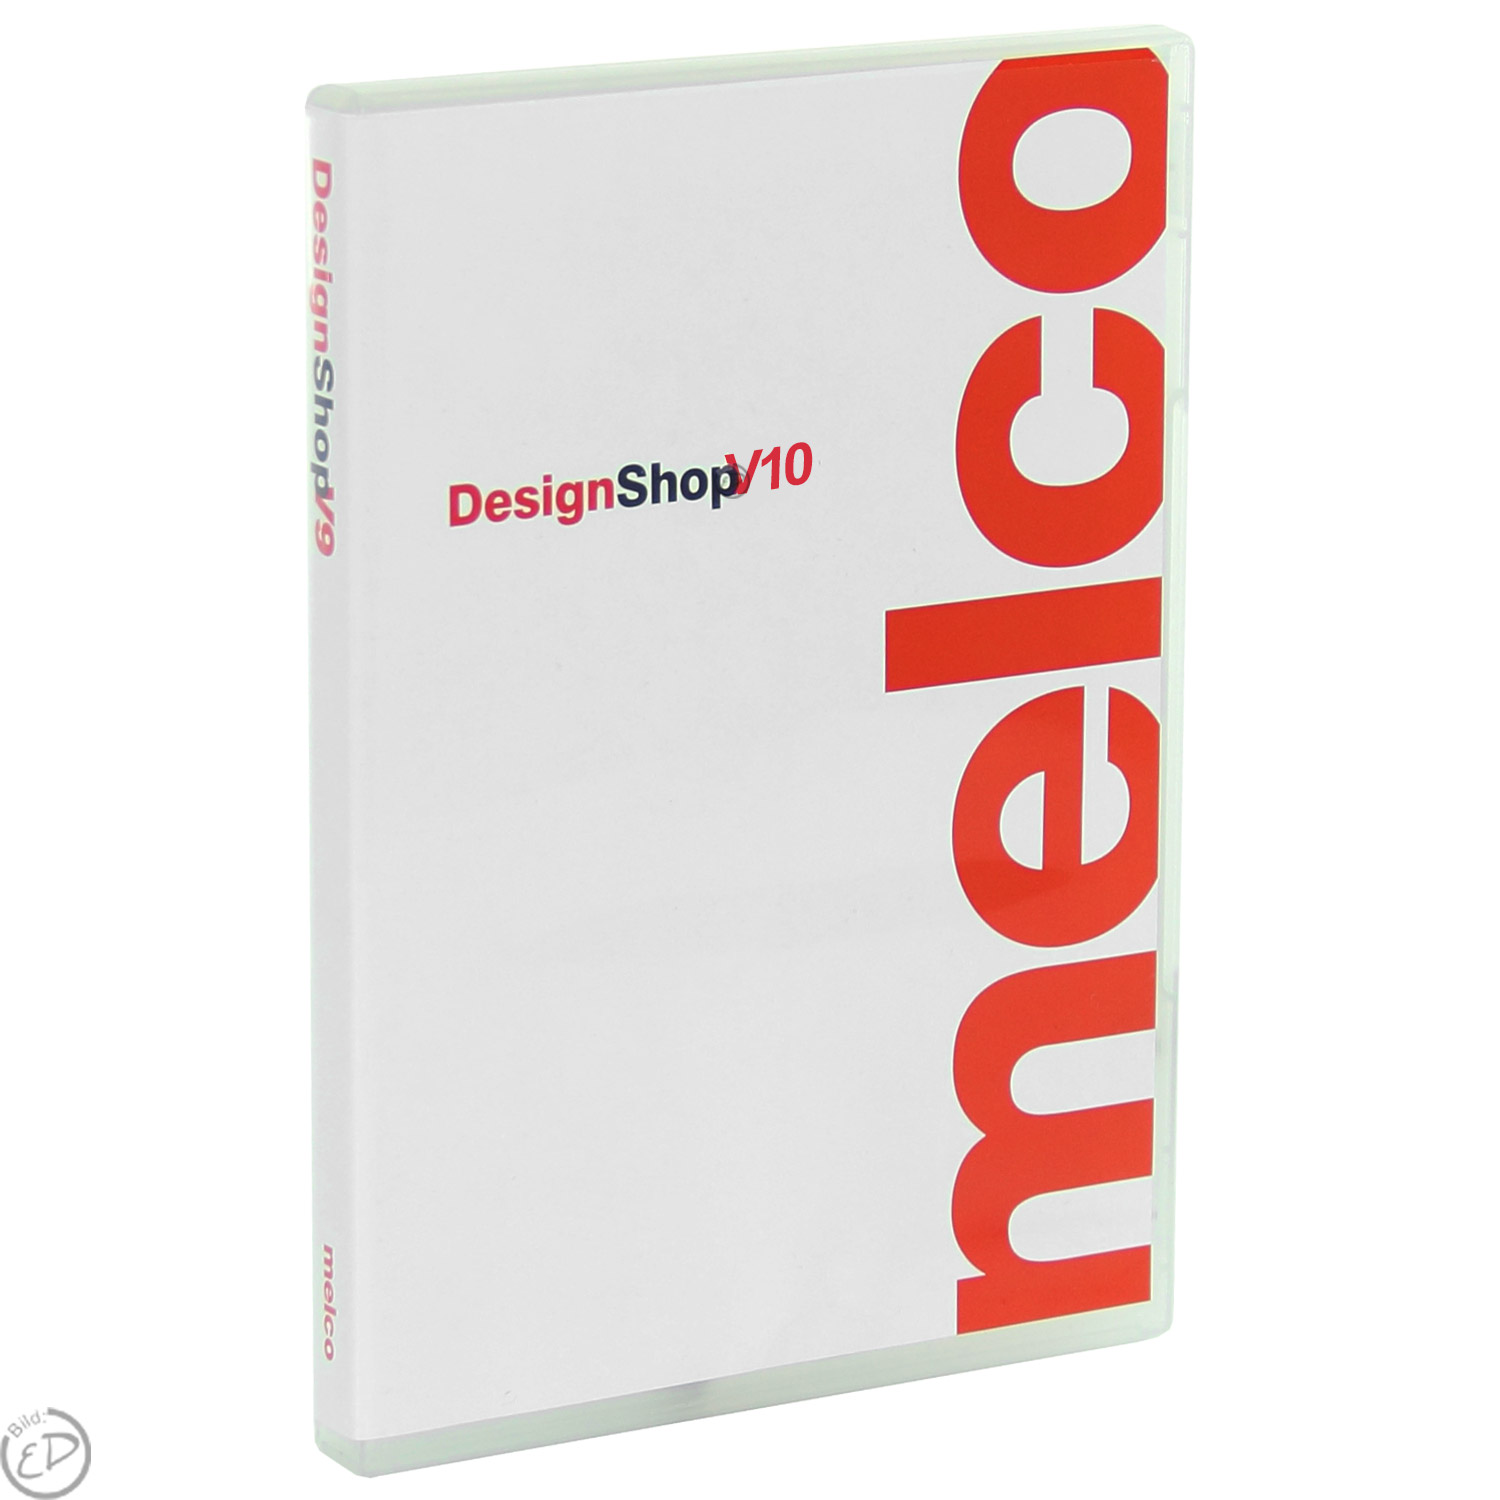 Melco Design Shop Pro Free Download